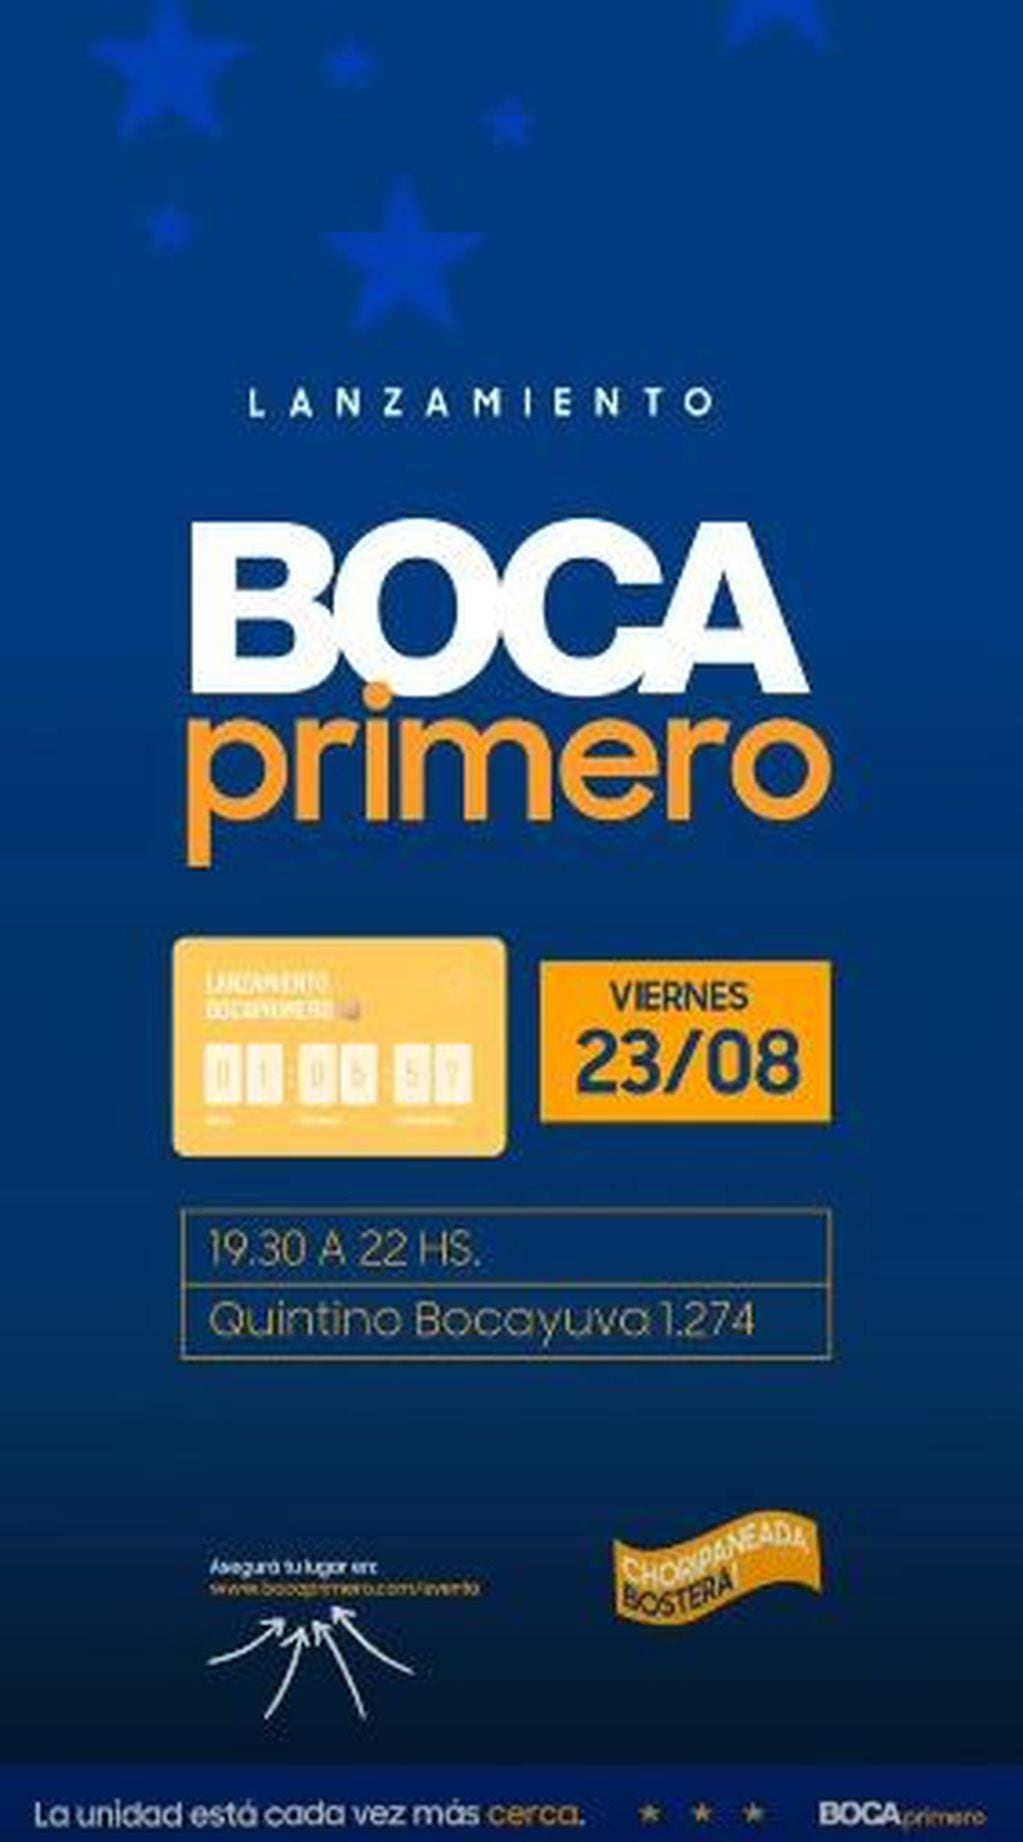 Boca Primero se lanza oficialmente este 23 de agosto. Instagram/bocaprimero_ok